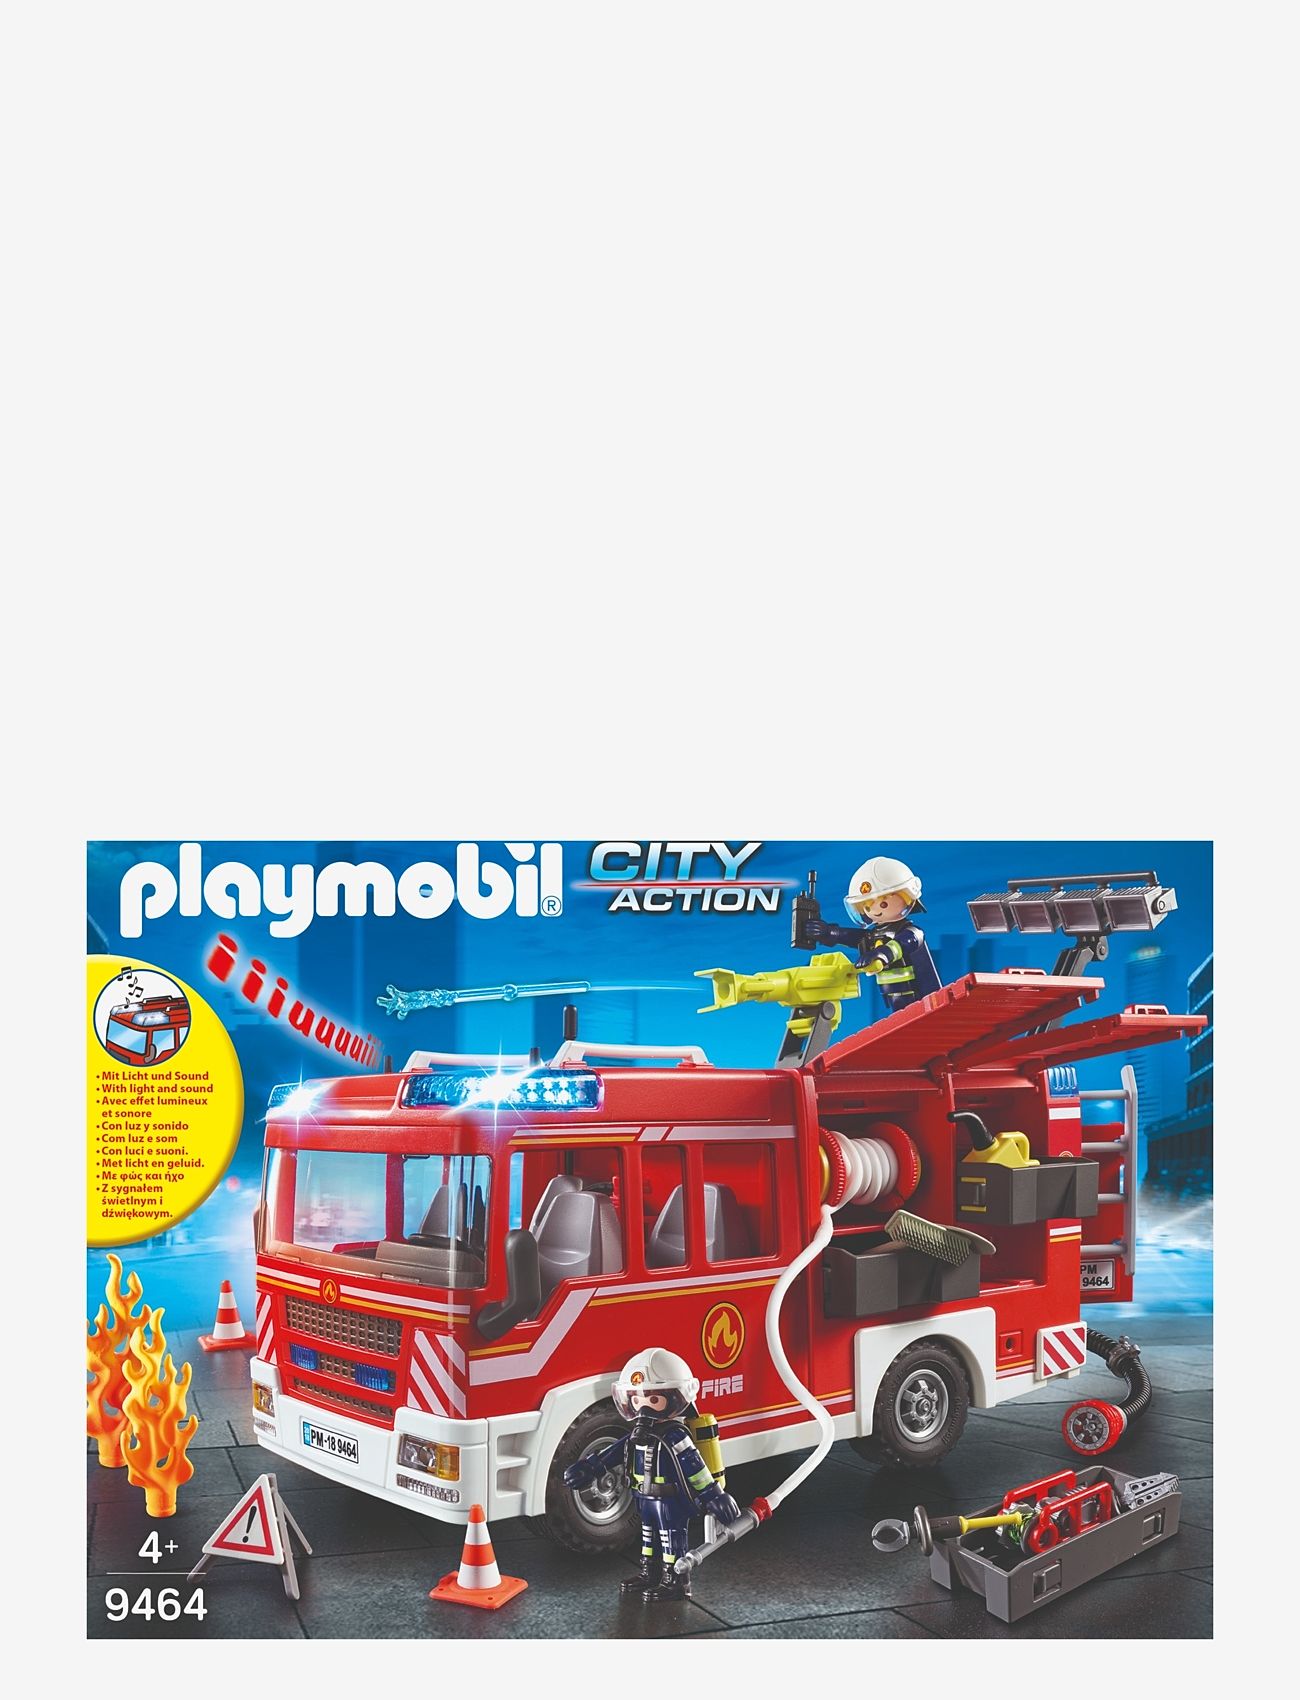 PLAYMOBIL - PLAYMOBIL City Action Fire Engine - 9464 - playmobil city action - multicolored - 1